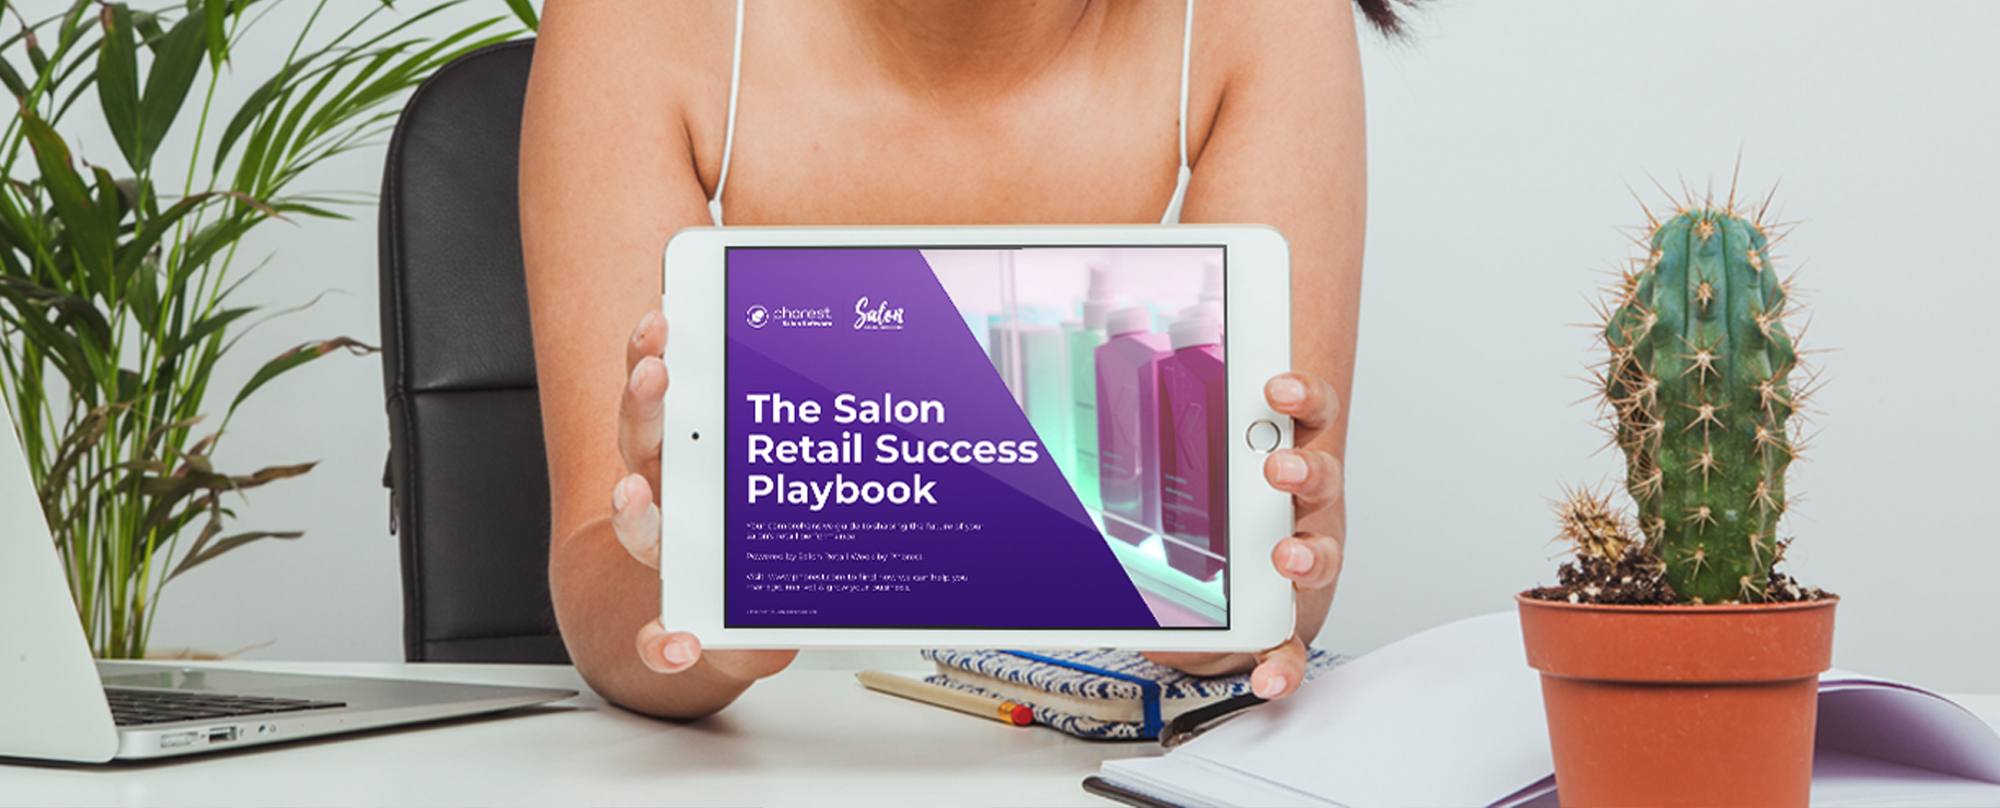 Get Your Copy: The Salon Retail Success Playbook